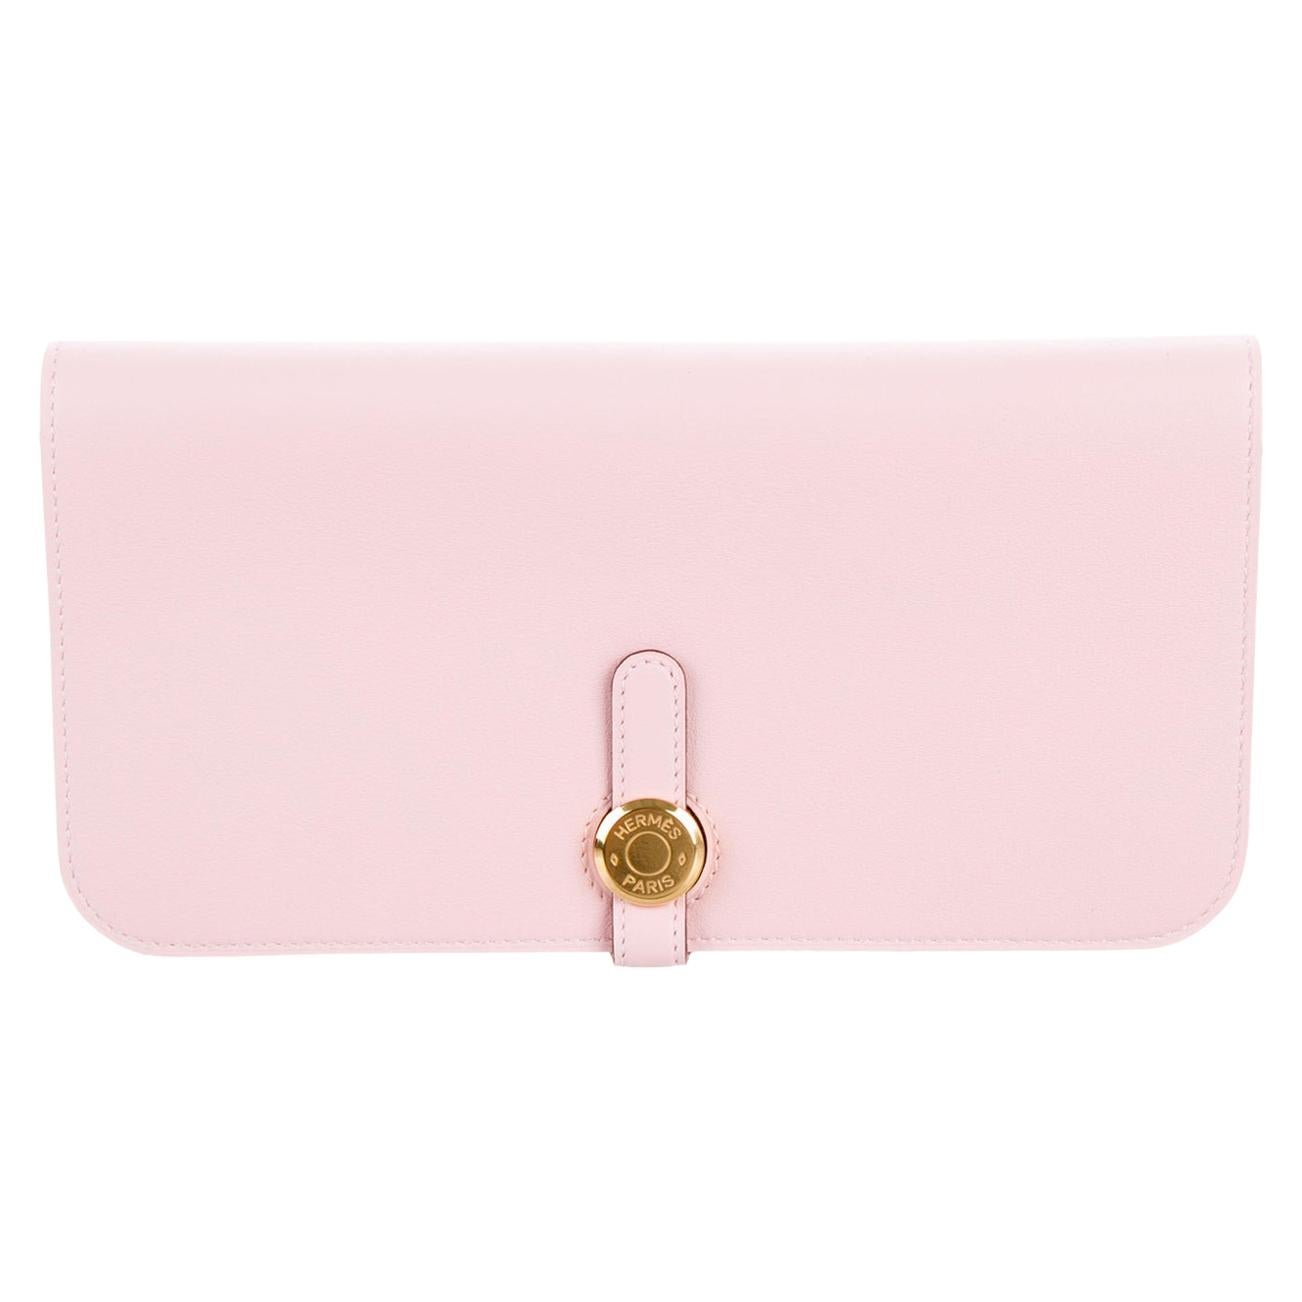 Hermes Light Pink Leather Gold Envelope Evening Clutch Wallet in Box